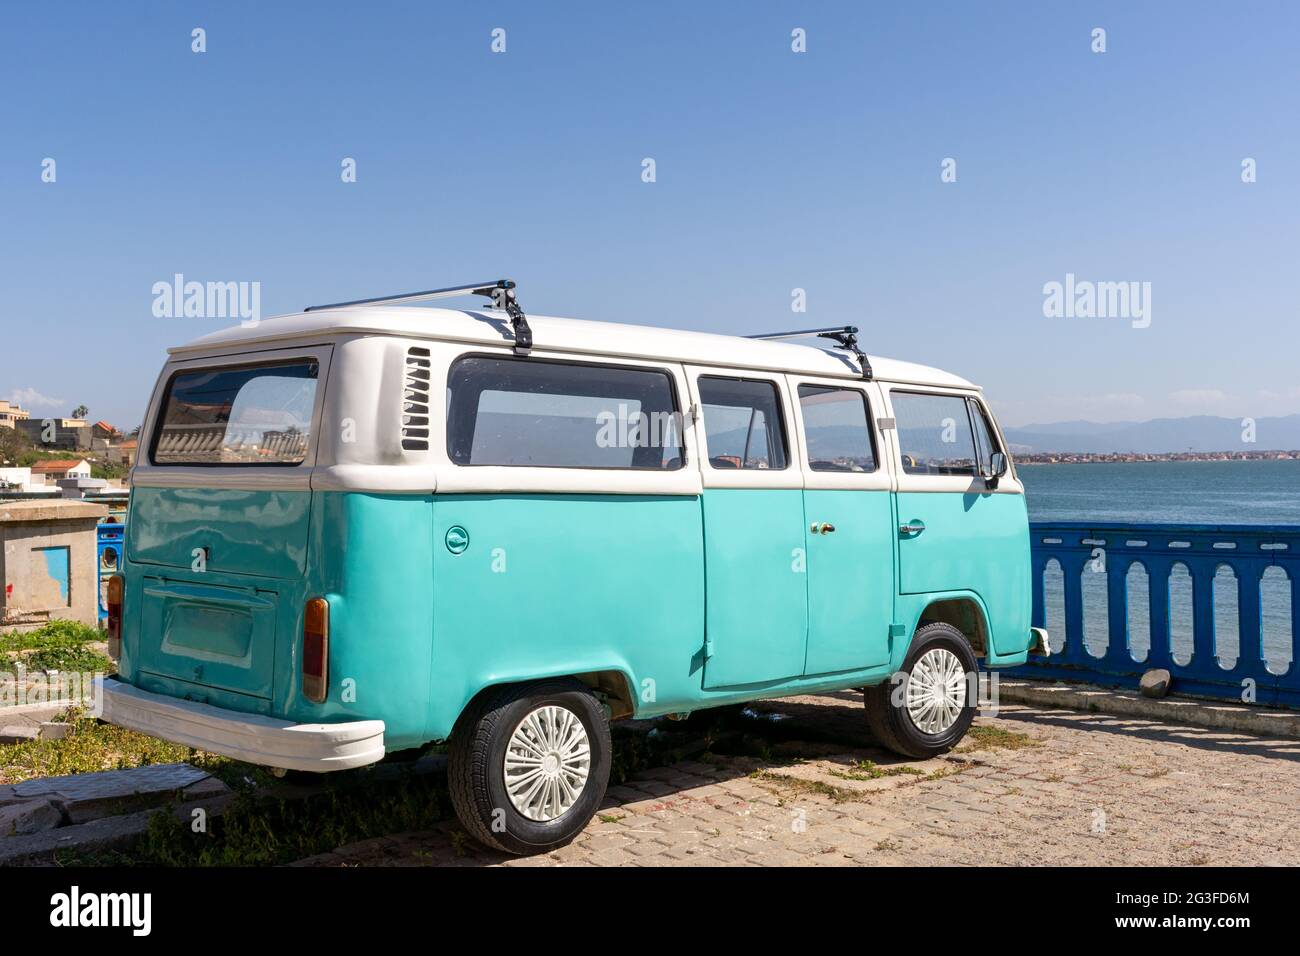 Türkis Volkswagen van in der Nähe des Strandes geparkt, Sommerurlaub Konzept. Stockfoto